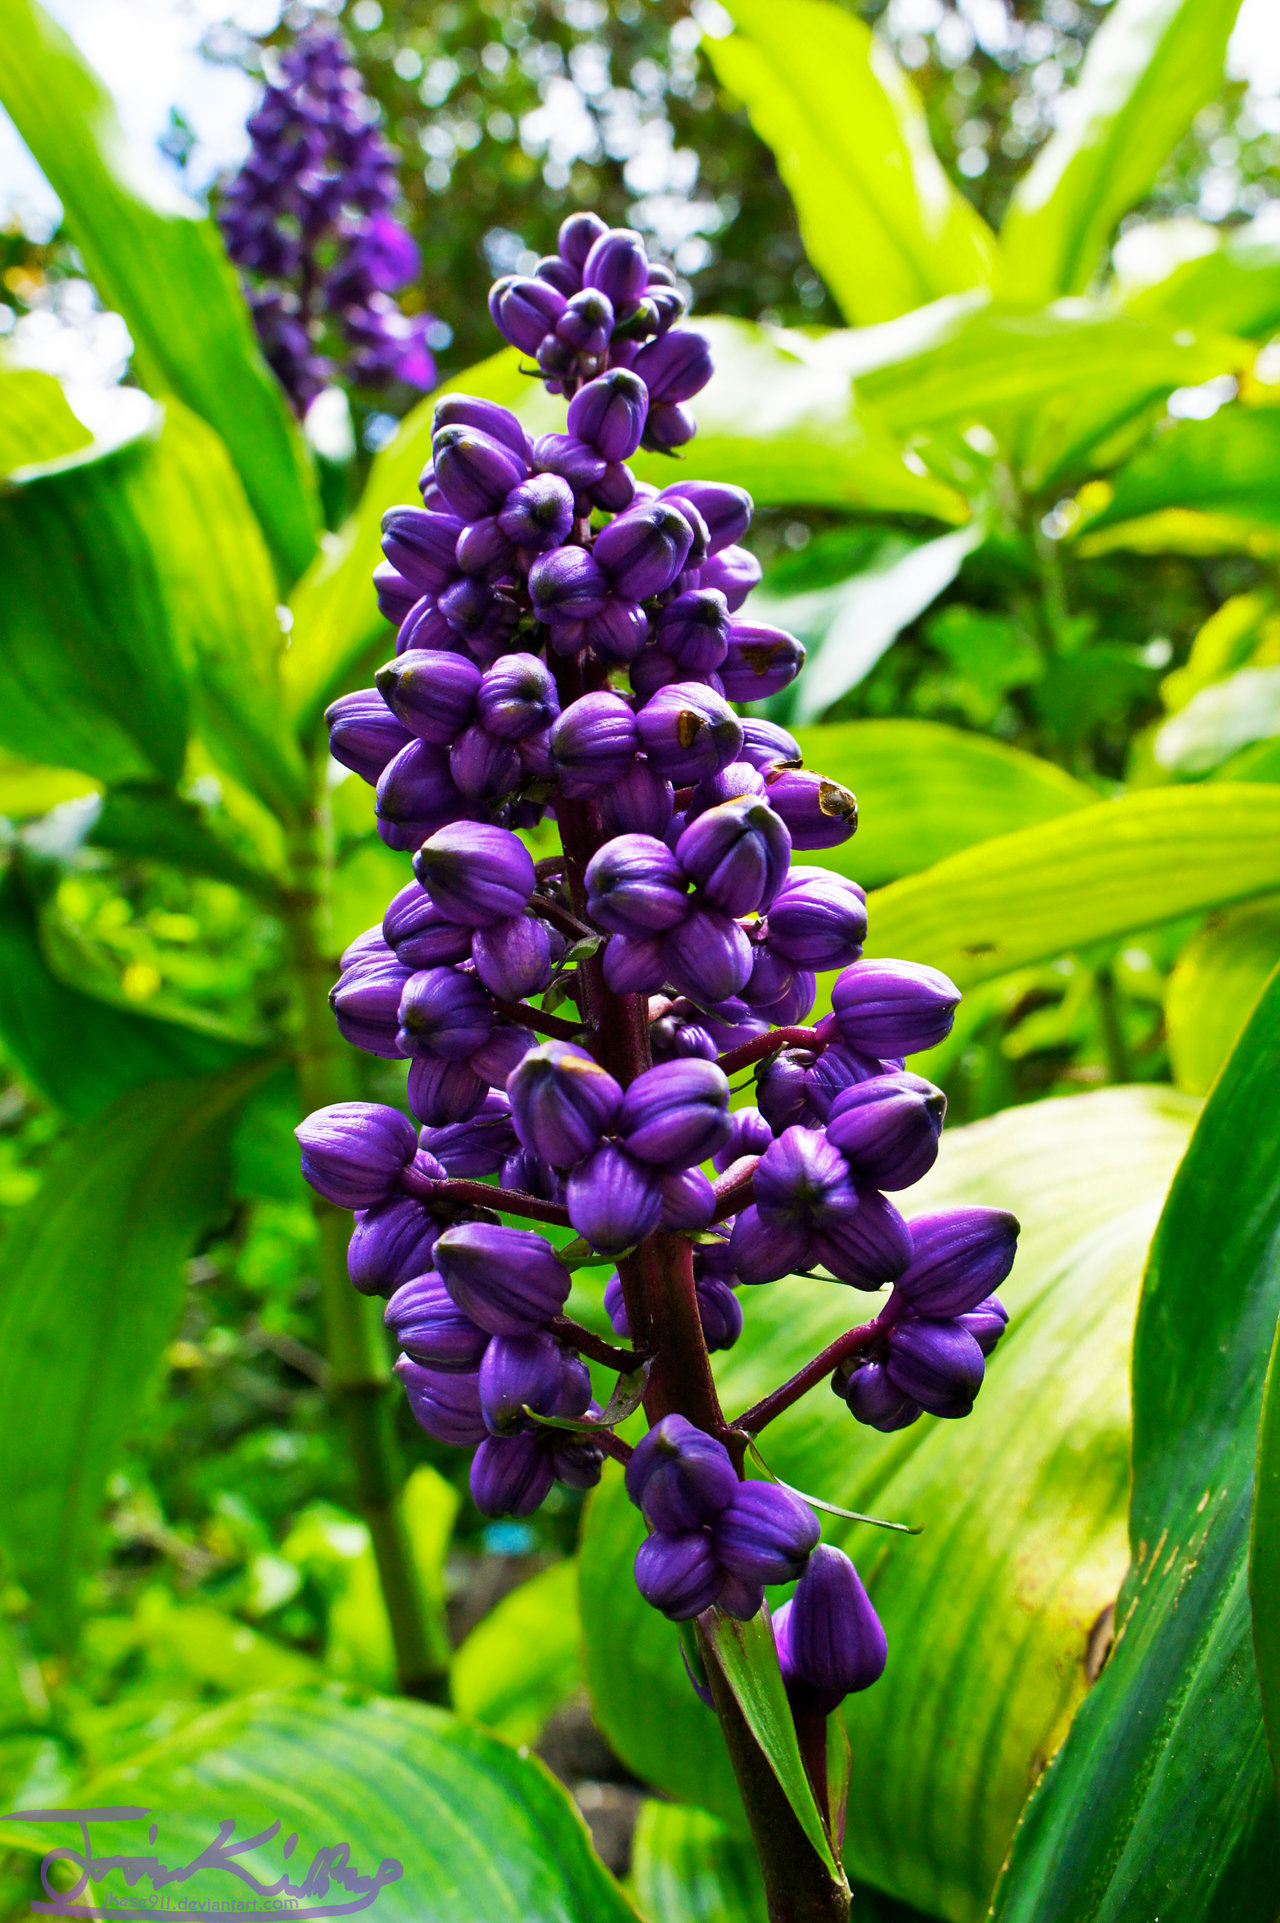 Purple Flower Buds by JKase911 on DeviantArt